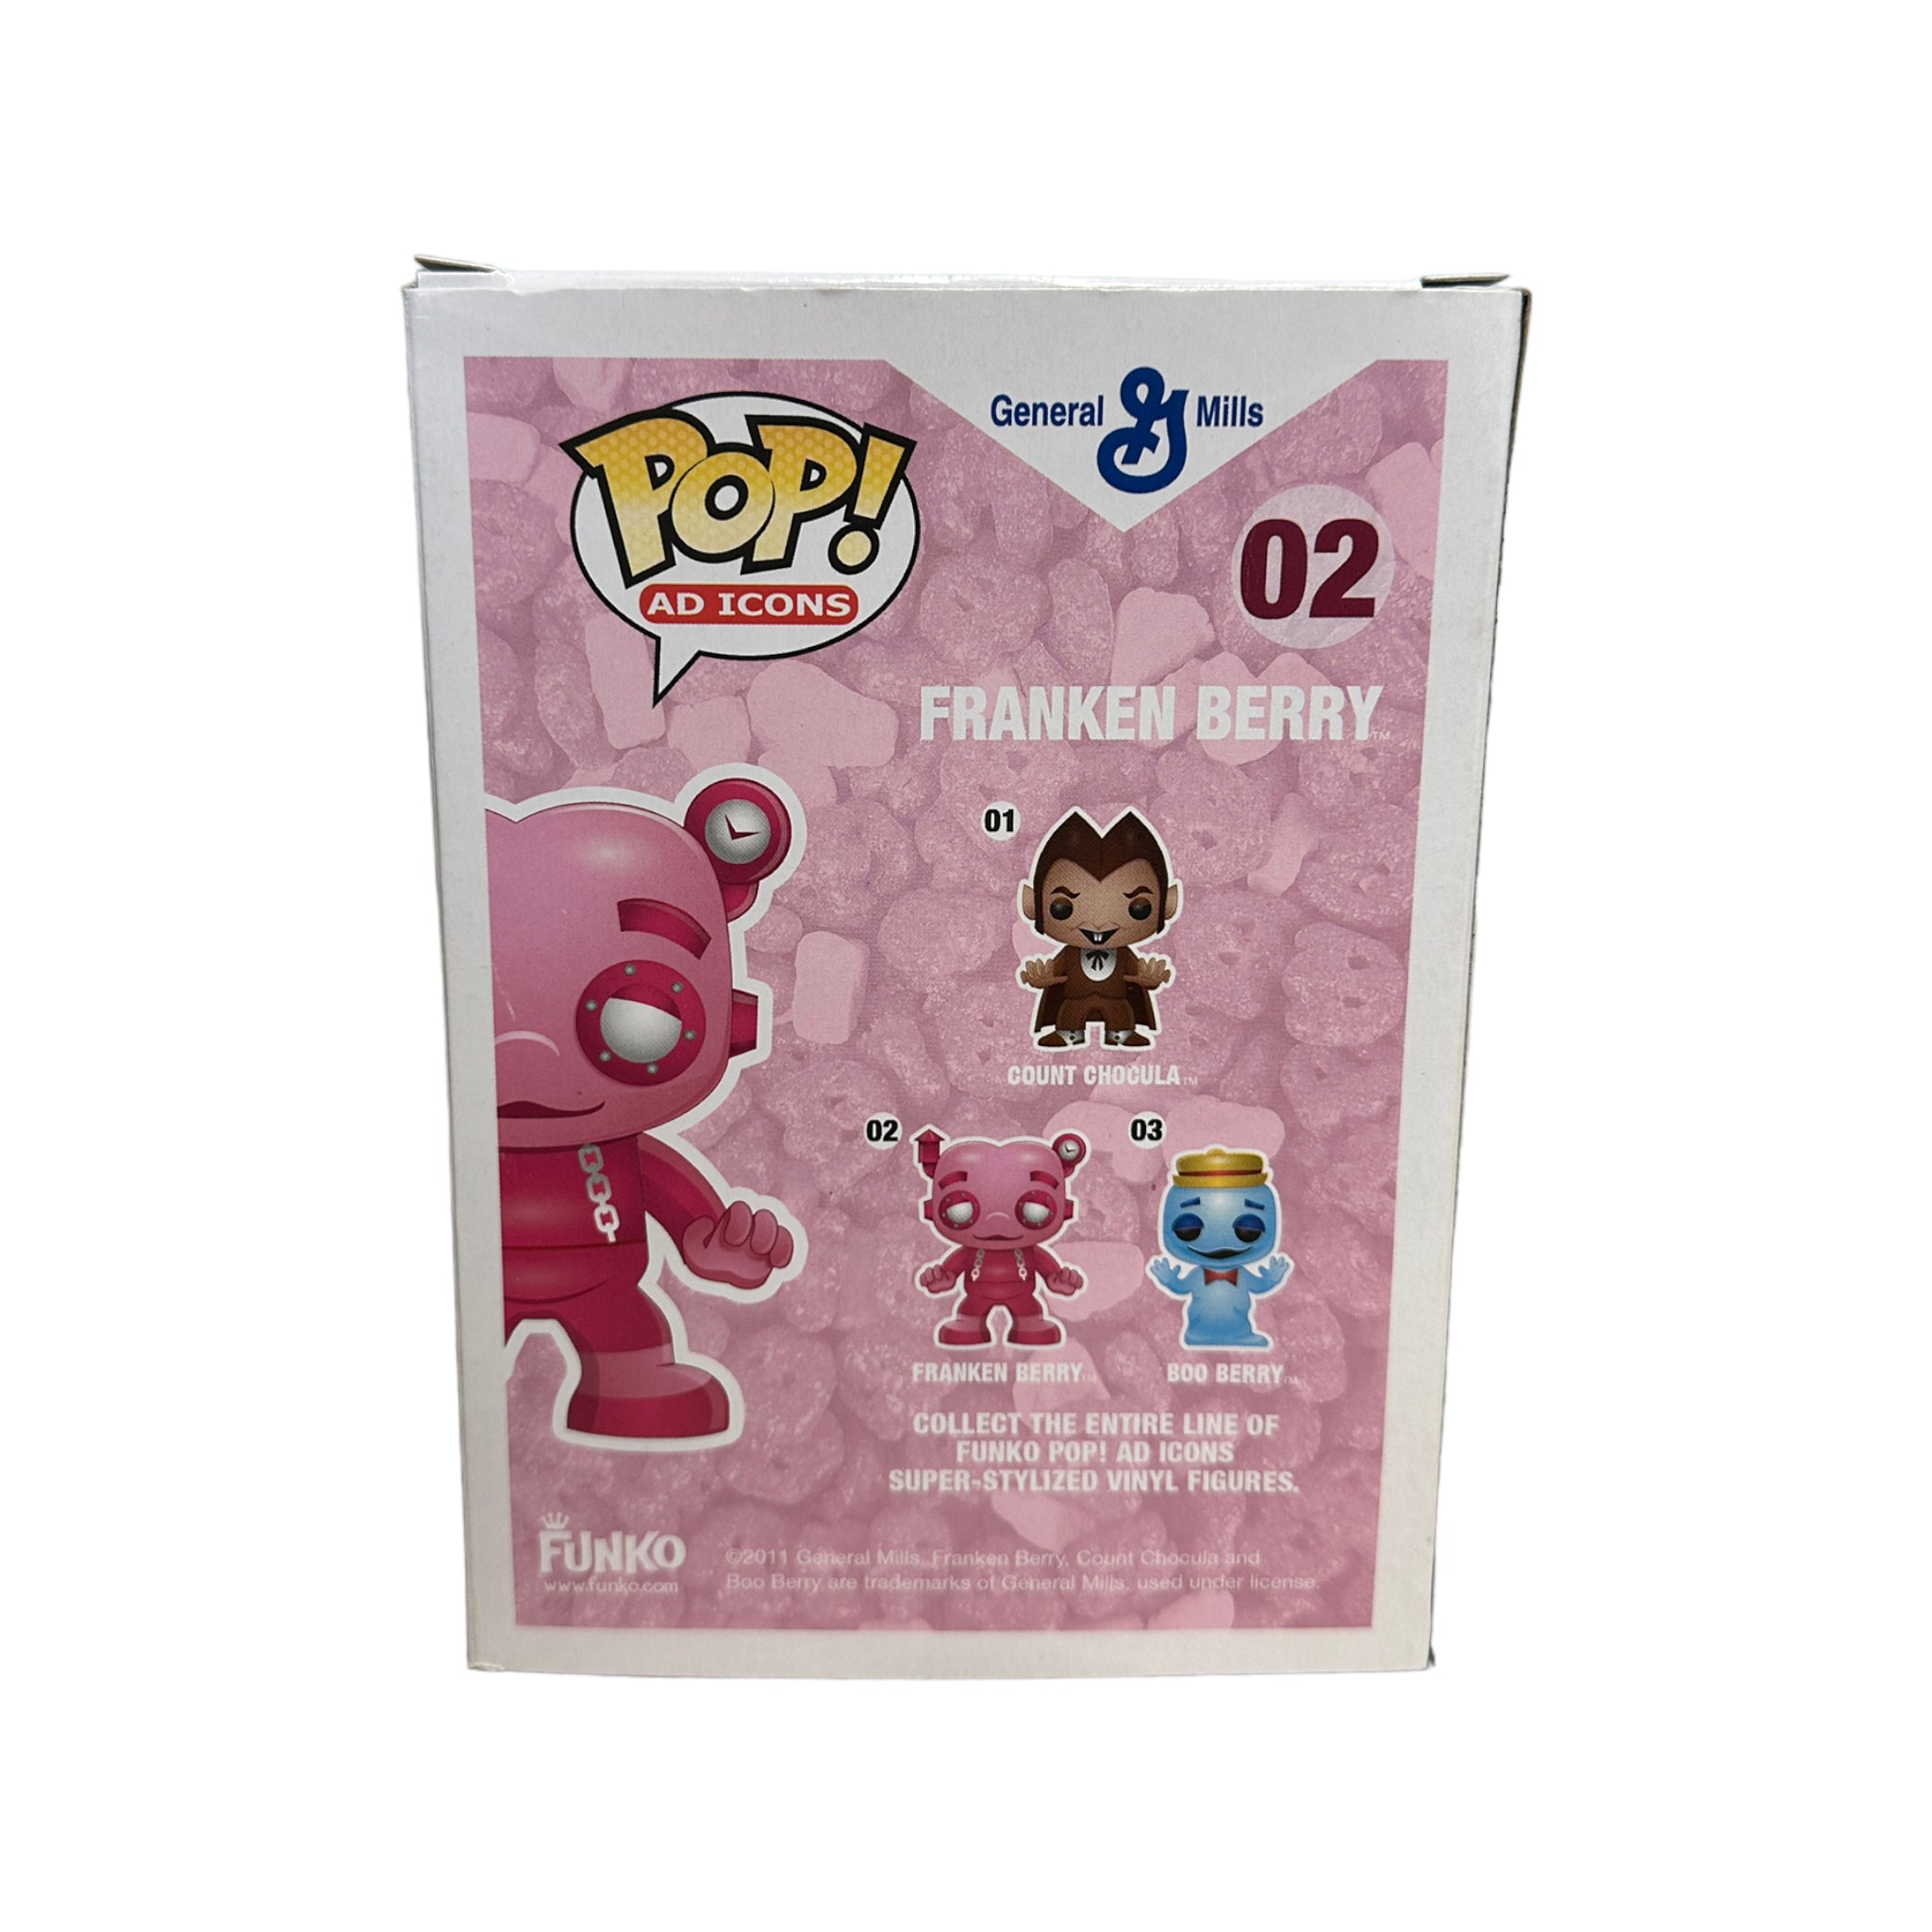 Franken Berry #04 (Metallic) Funko Pop! - Ad Icons - SDCC 2011 Exclusive LE480 Pcs - Condition 7.5/10